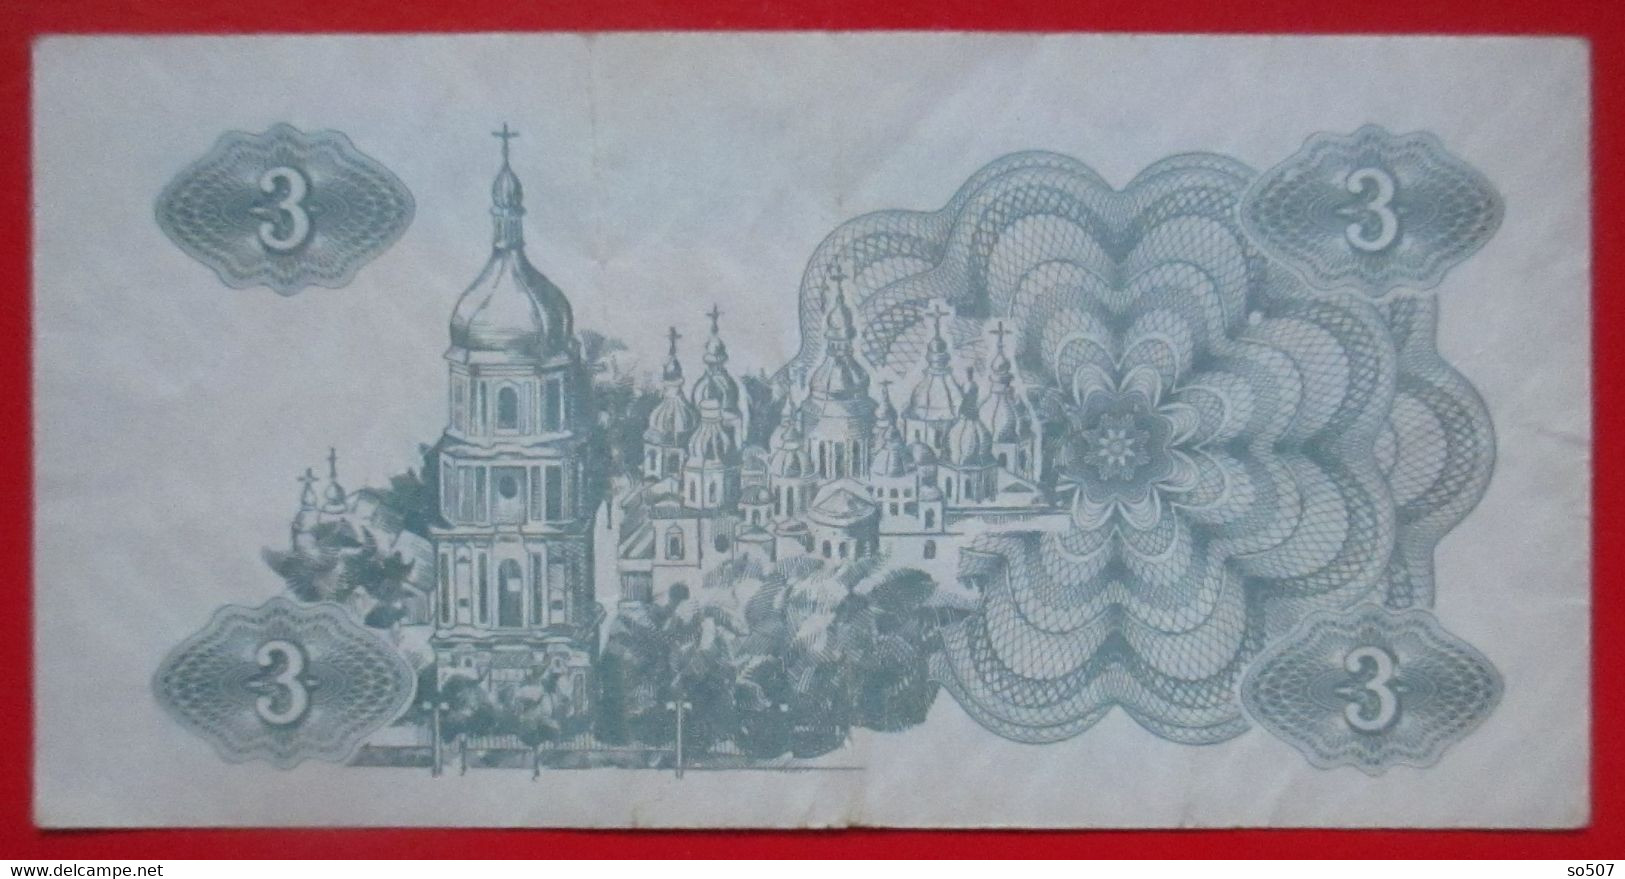 X1- 3 Karbovantsi 1991.Ukraine-Three Karbovanets,Sculpture Kyiv Founders,Saint Sophia Cathedral Kyiv,Circulated Banknote - Ukraine